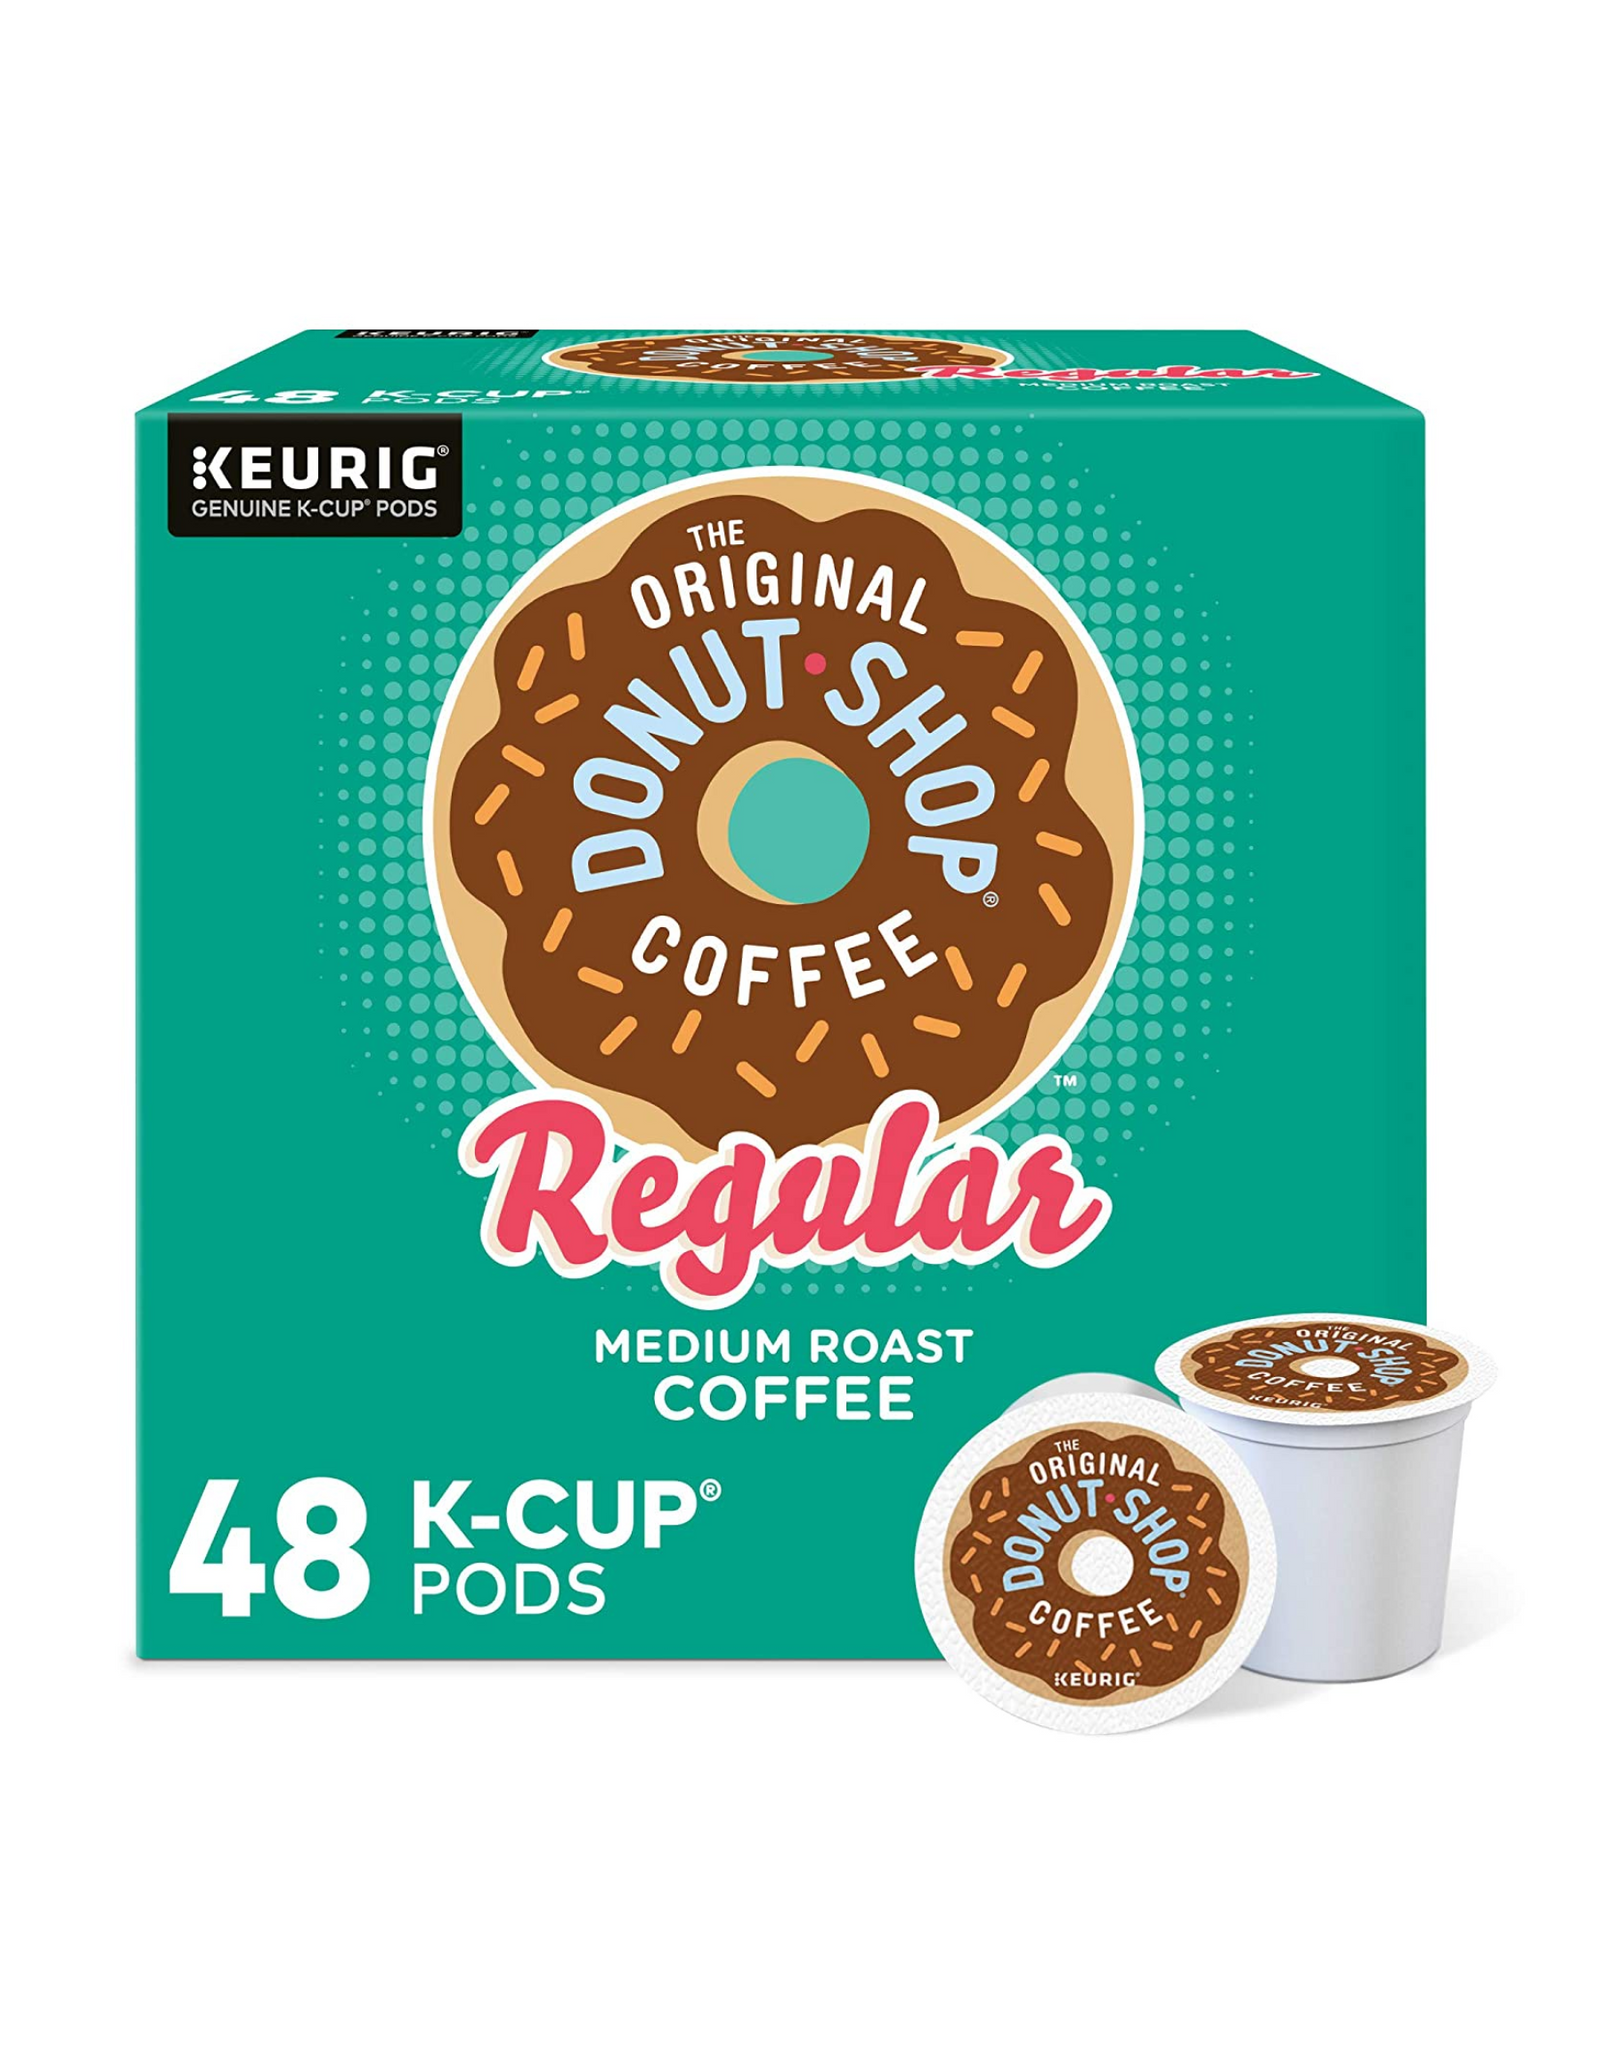 The Original Donut Shop Regular K-Cup Pods, Medium Roast Coffee, 48 Count